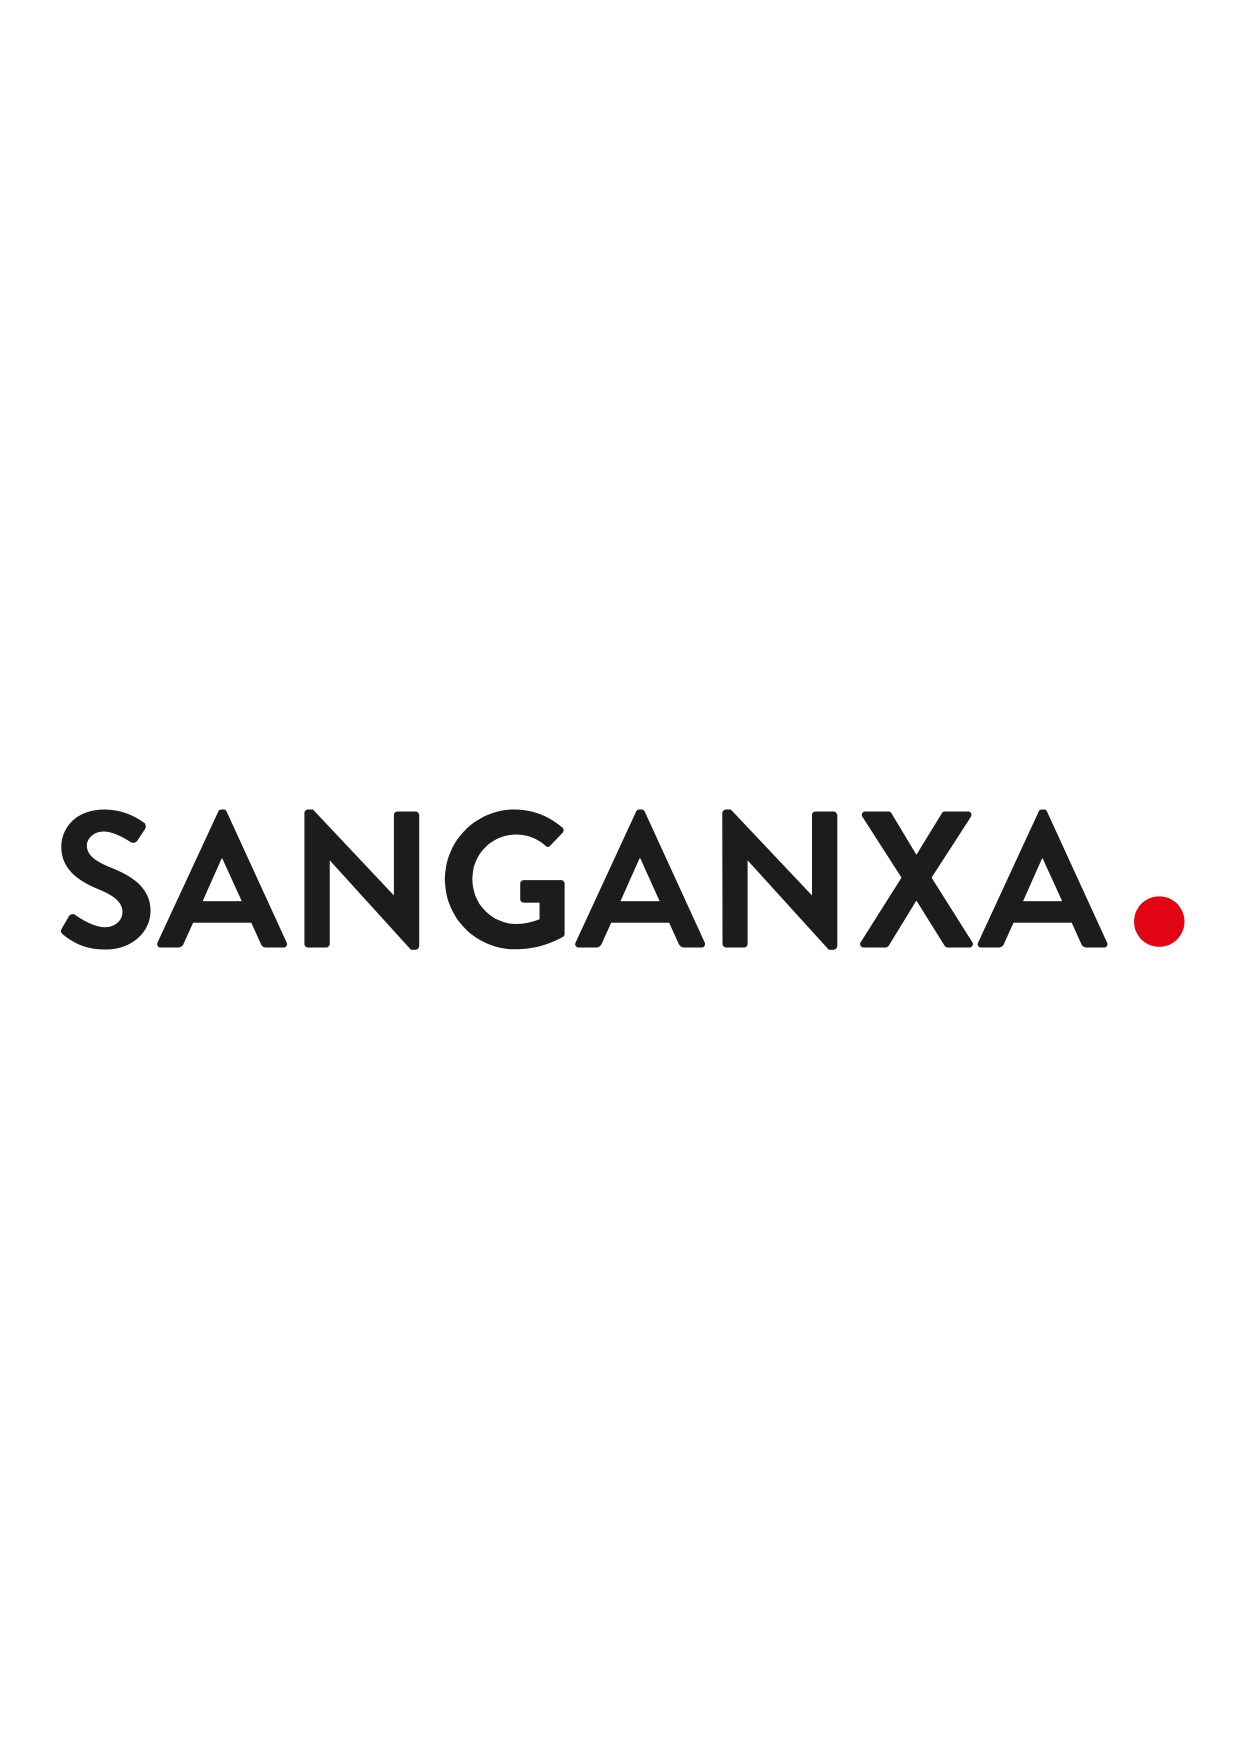 Logo Sanganxa Calidad.jpg